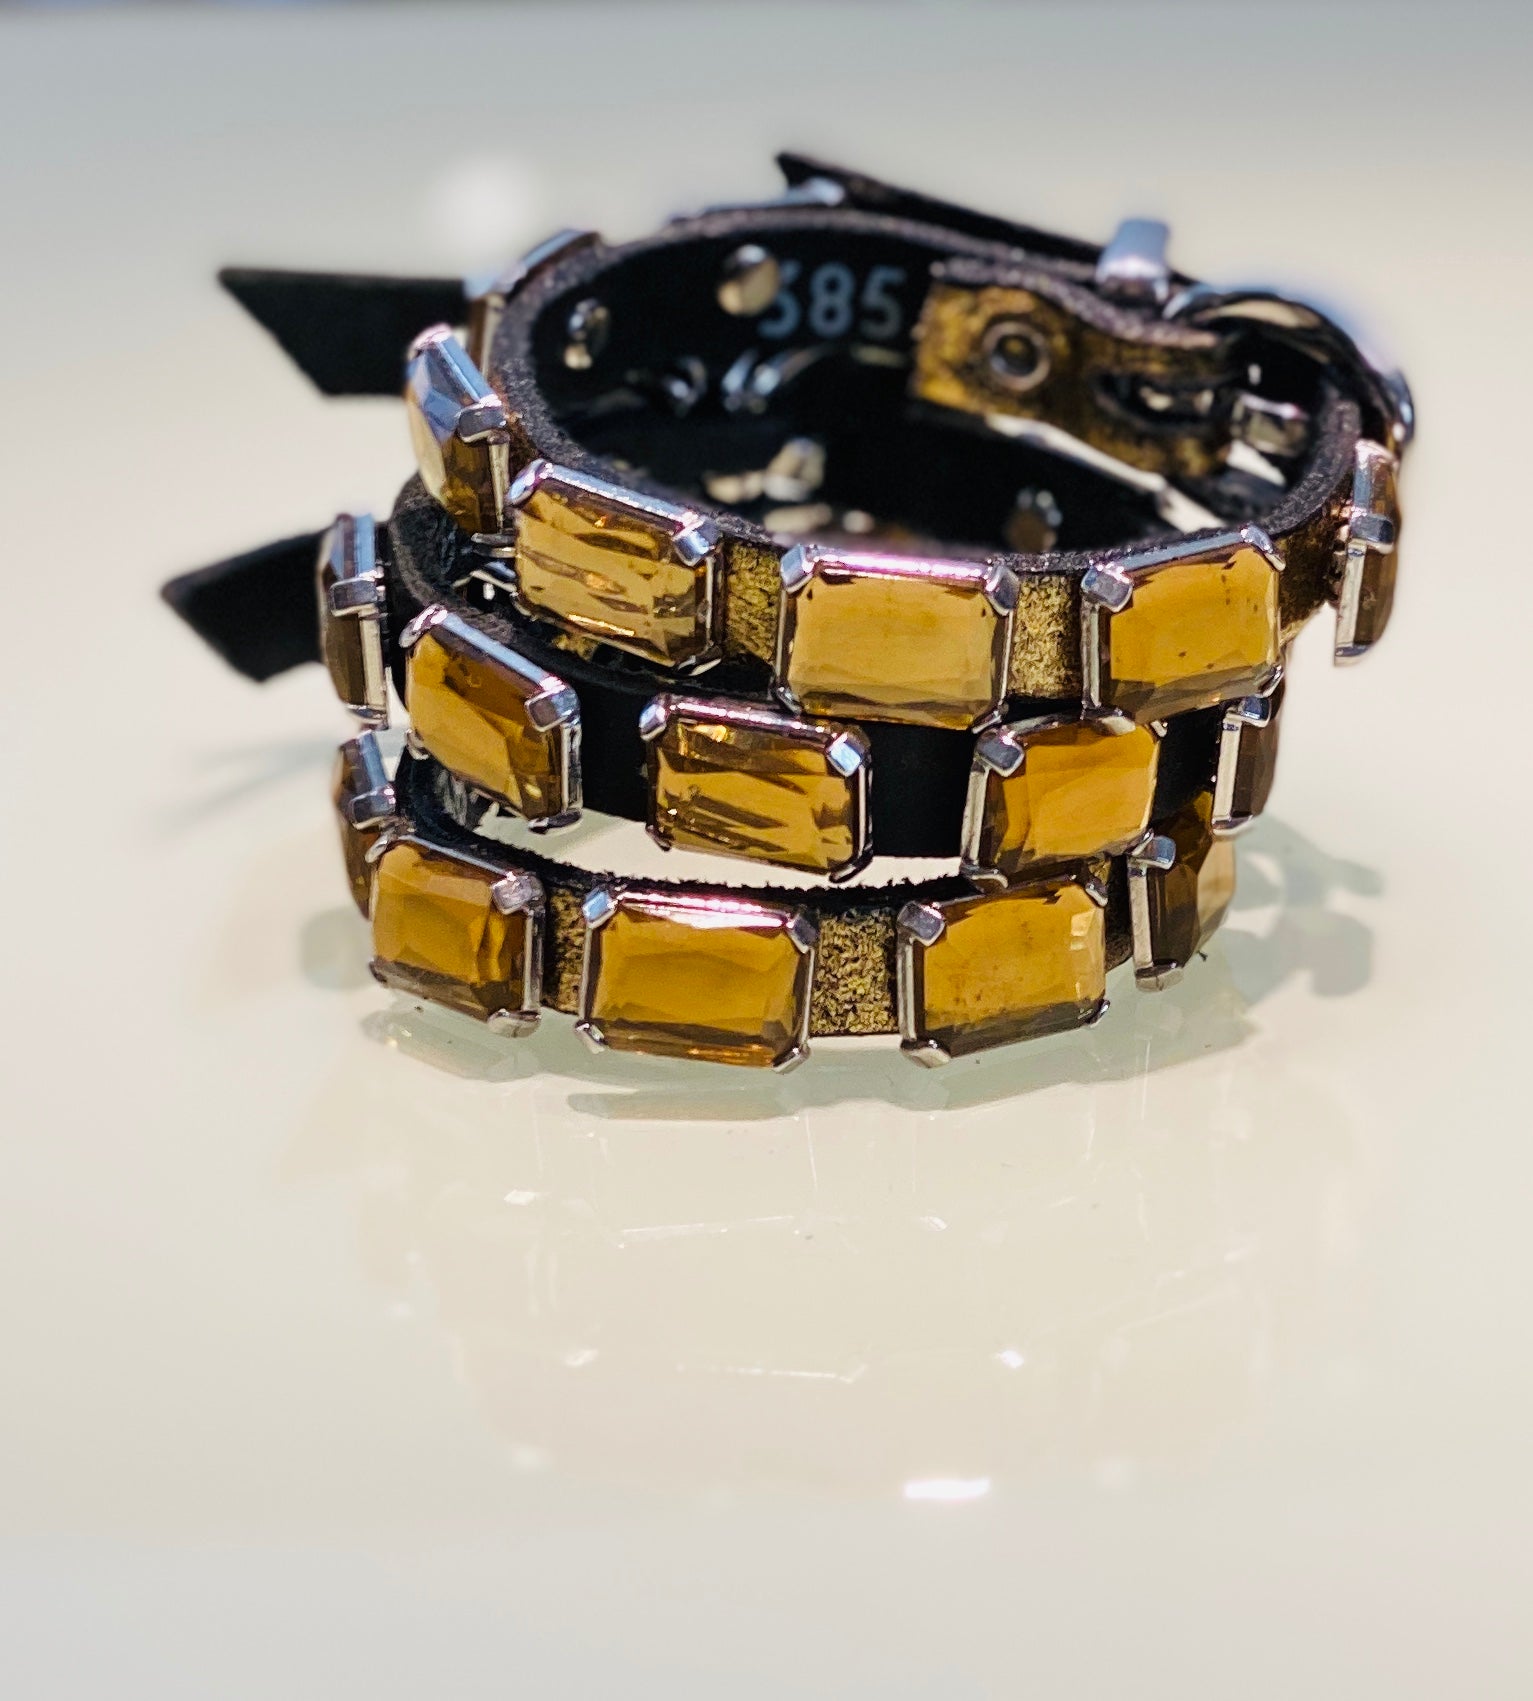 Goldenes Leder-Armband mit goldenen Steinen